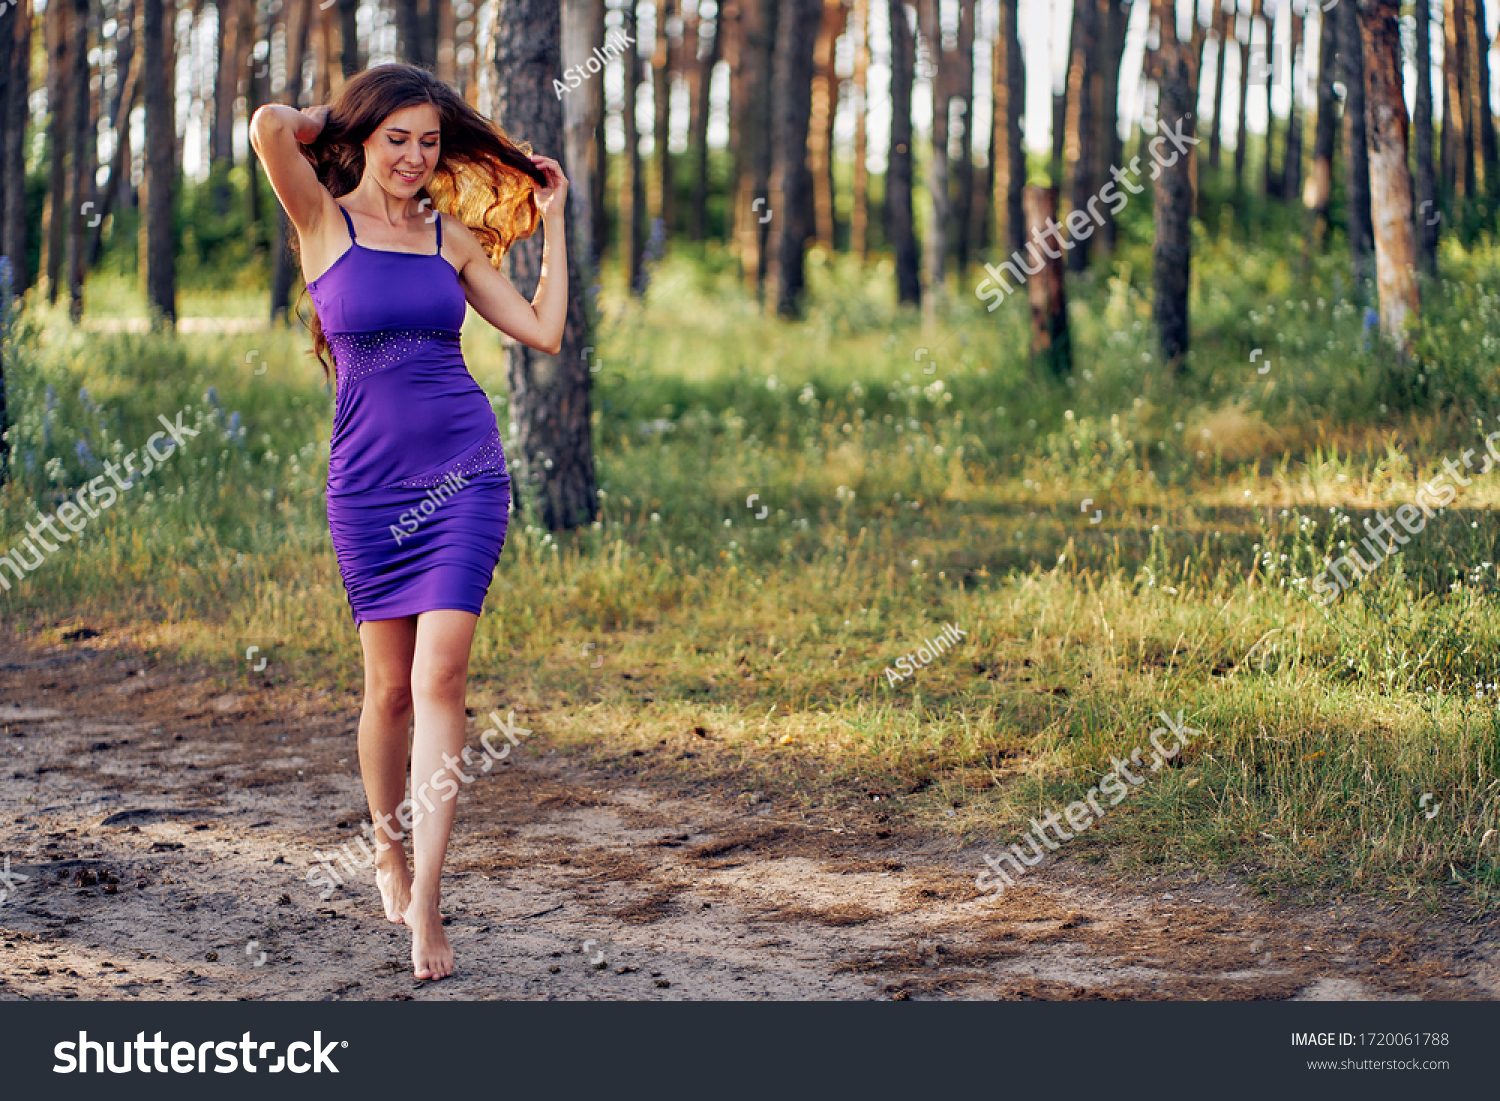 https://image.shutterstock.com/z/stock-photo-beautiful-woman-walks-barefoot-in-a-short-blue-dress-walks-in-the-park-at-sunset-1720061788.jpg